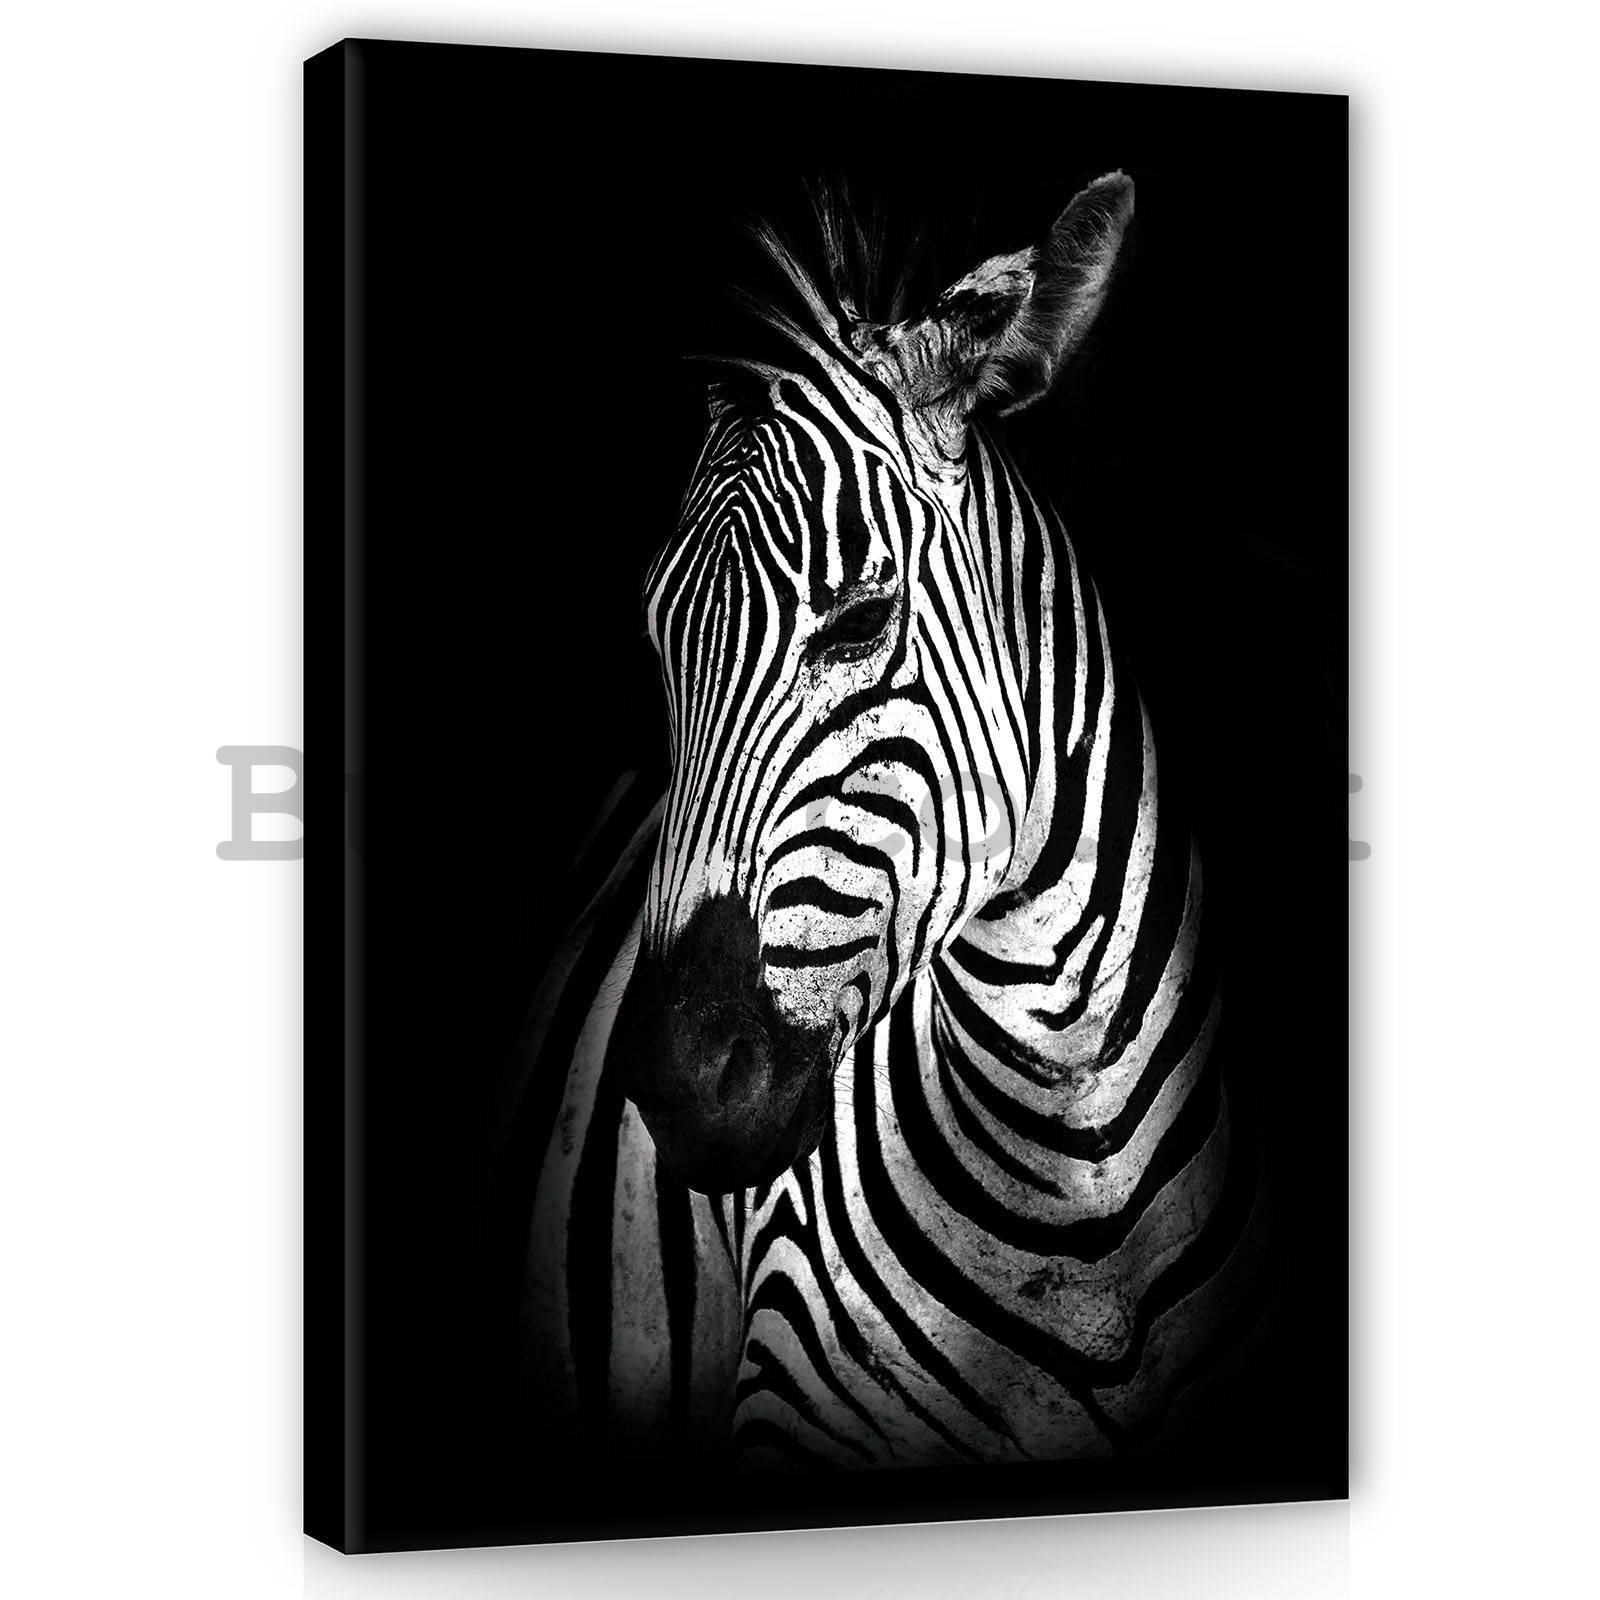 Painting on canvas: Zebra (2) - 60x80 cm